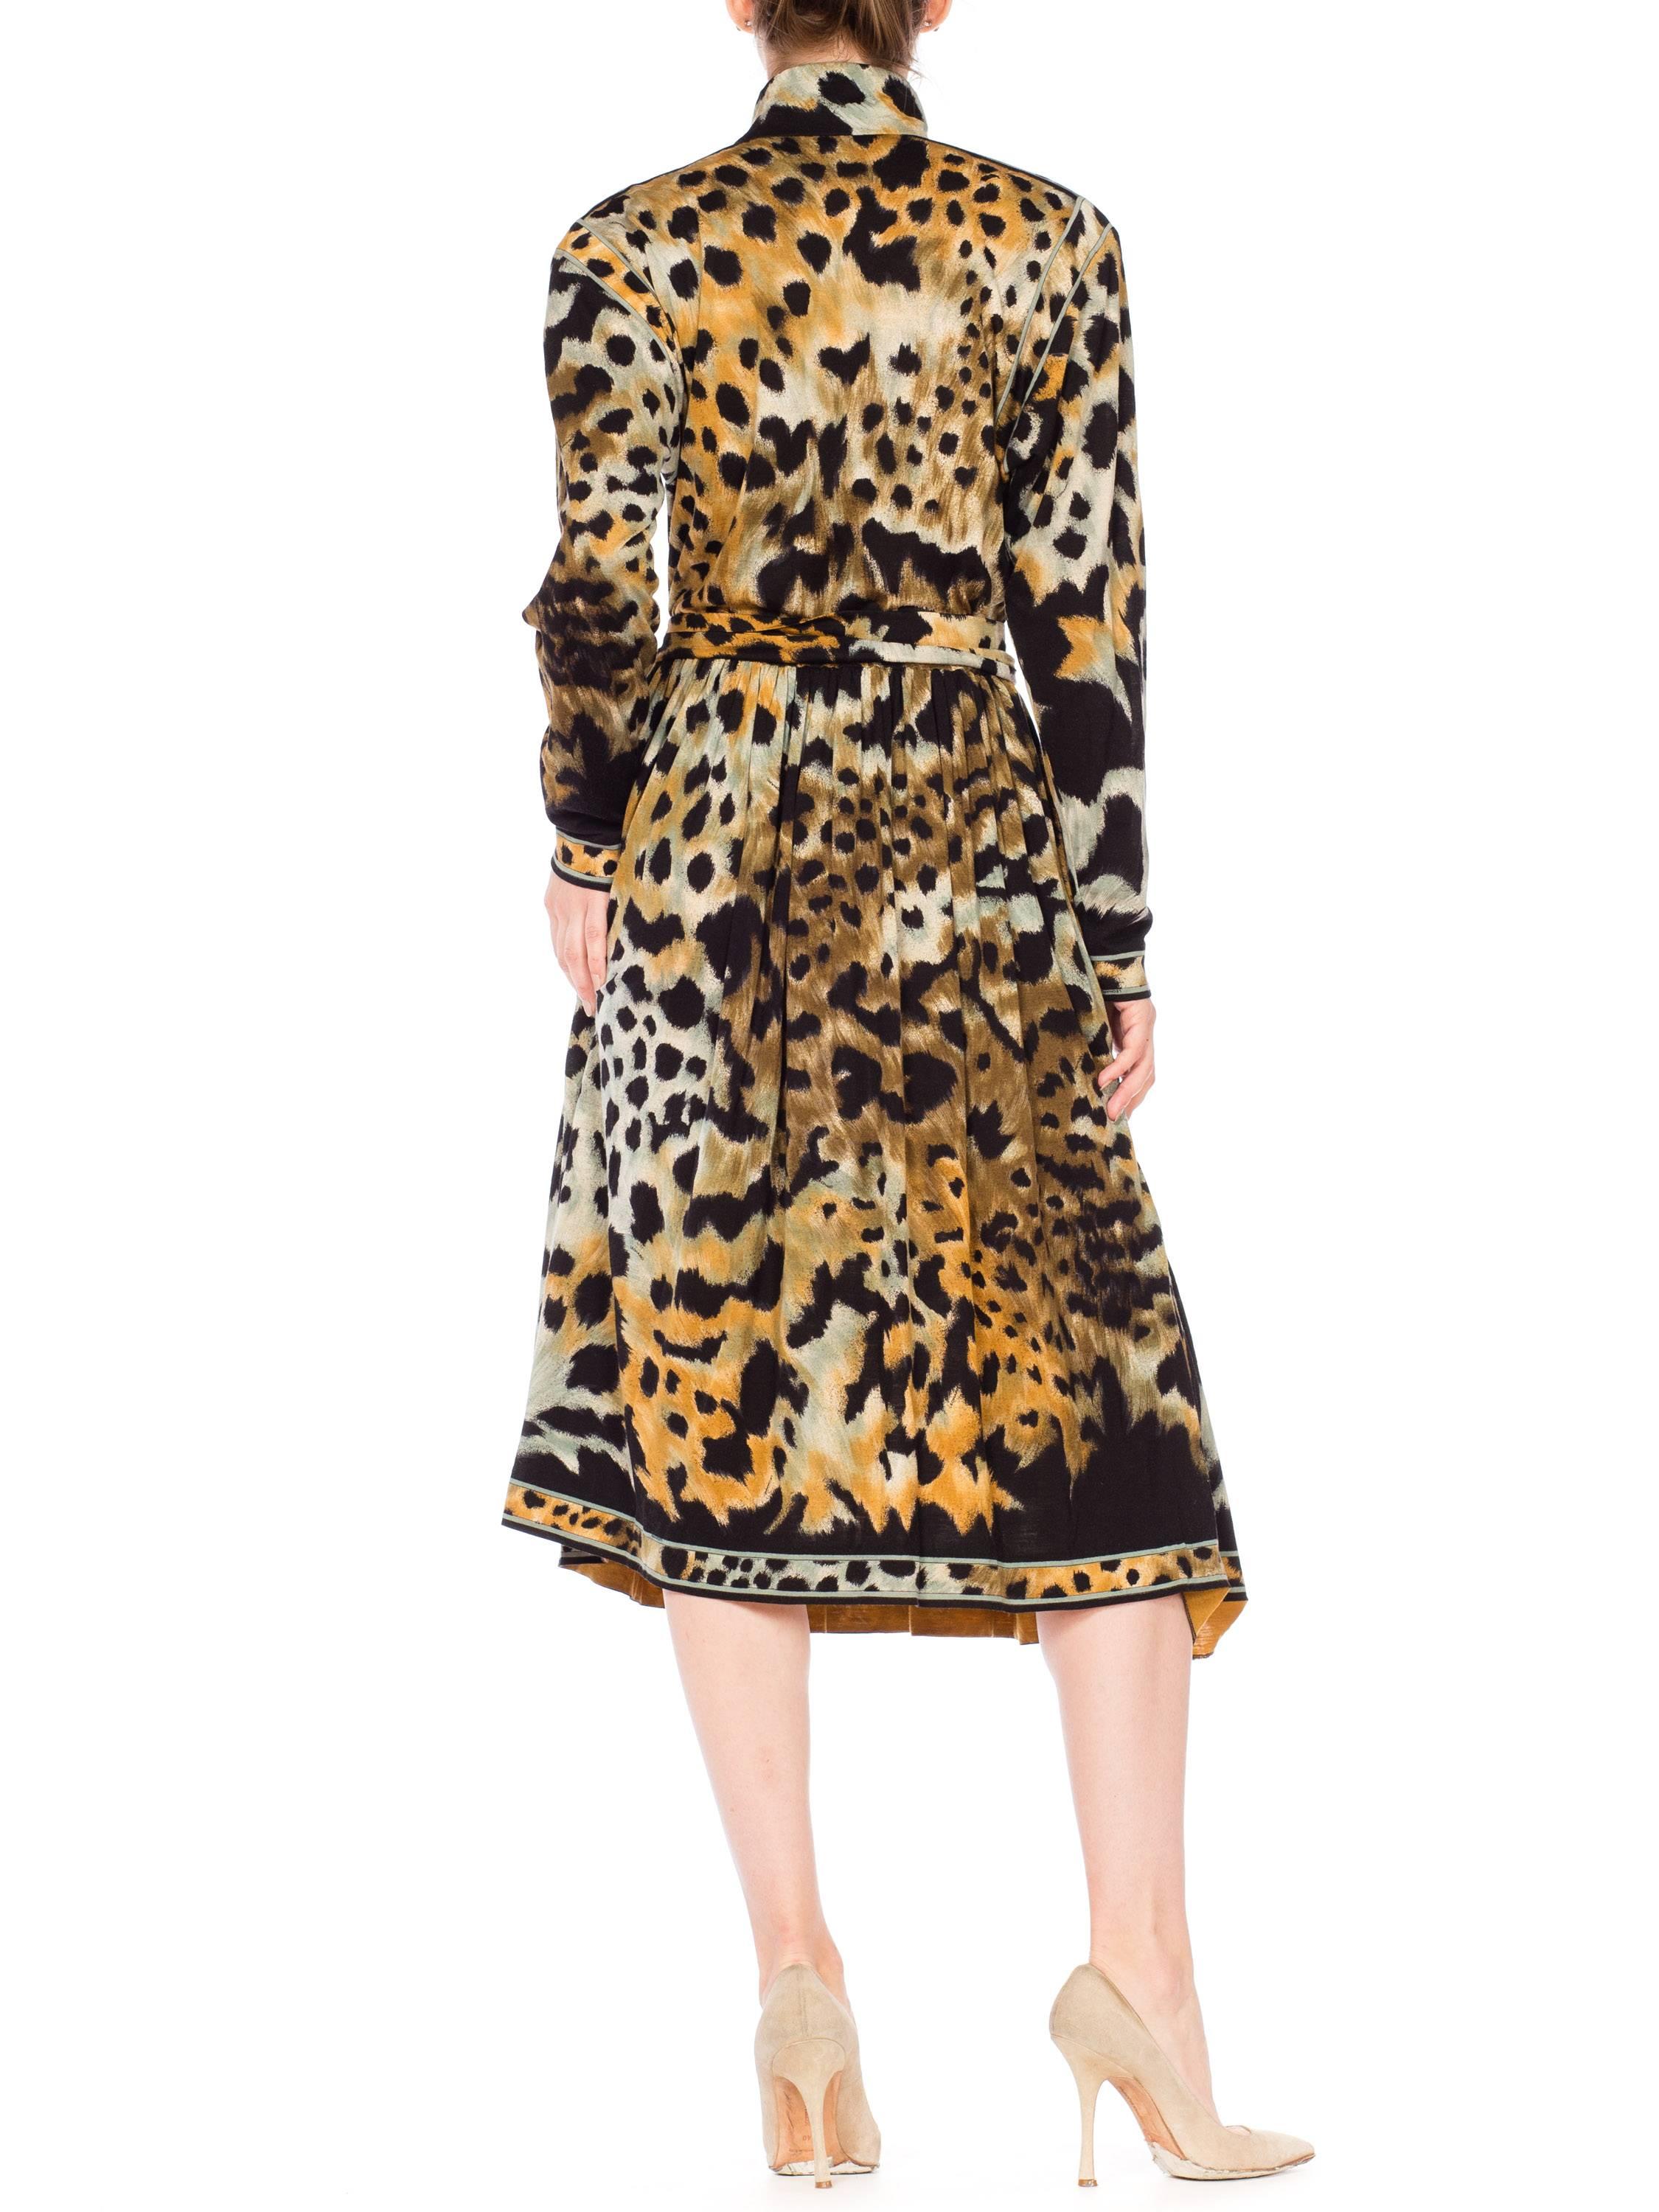 Leopard Print Leonard French Jersey Dress 2